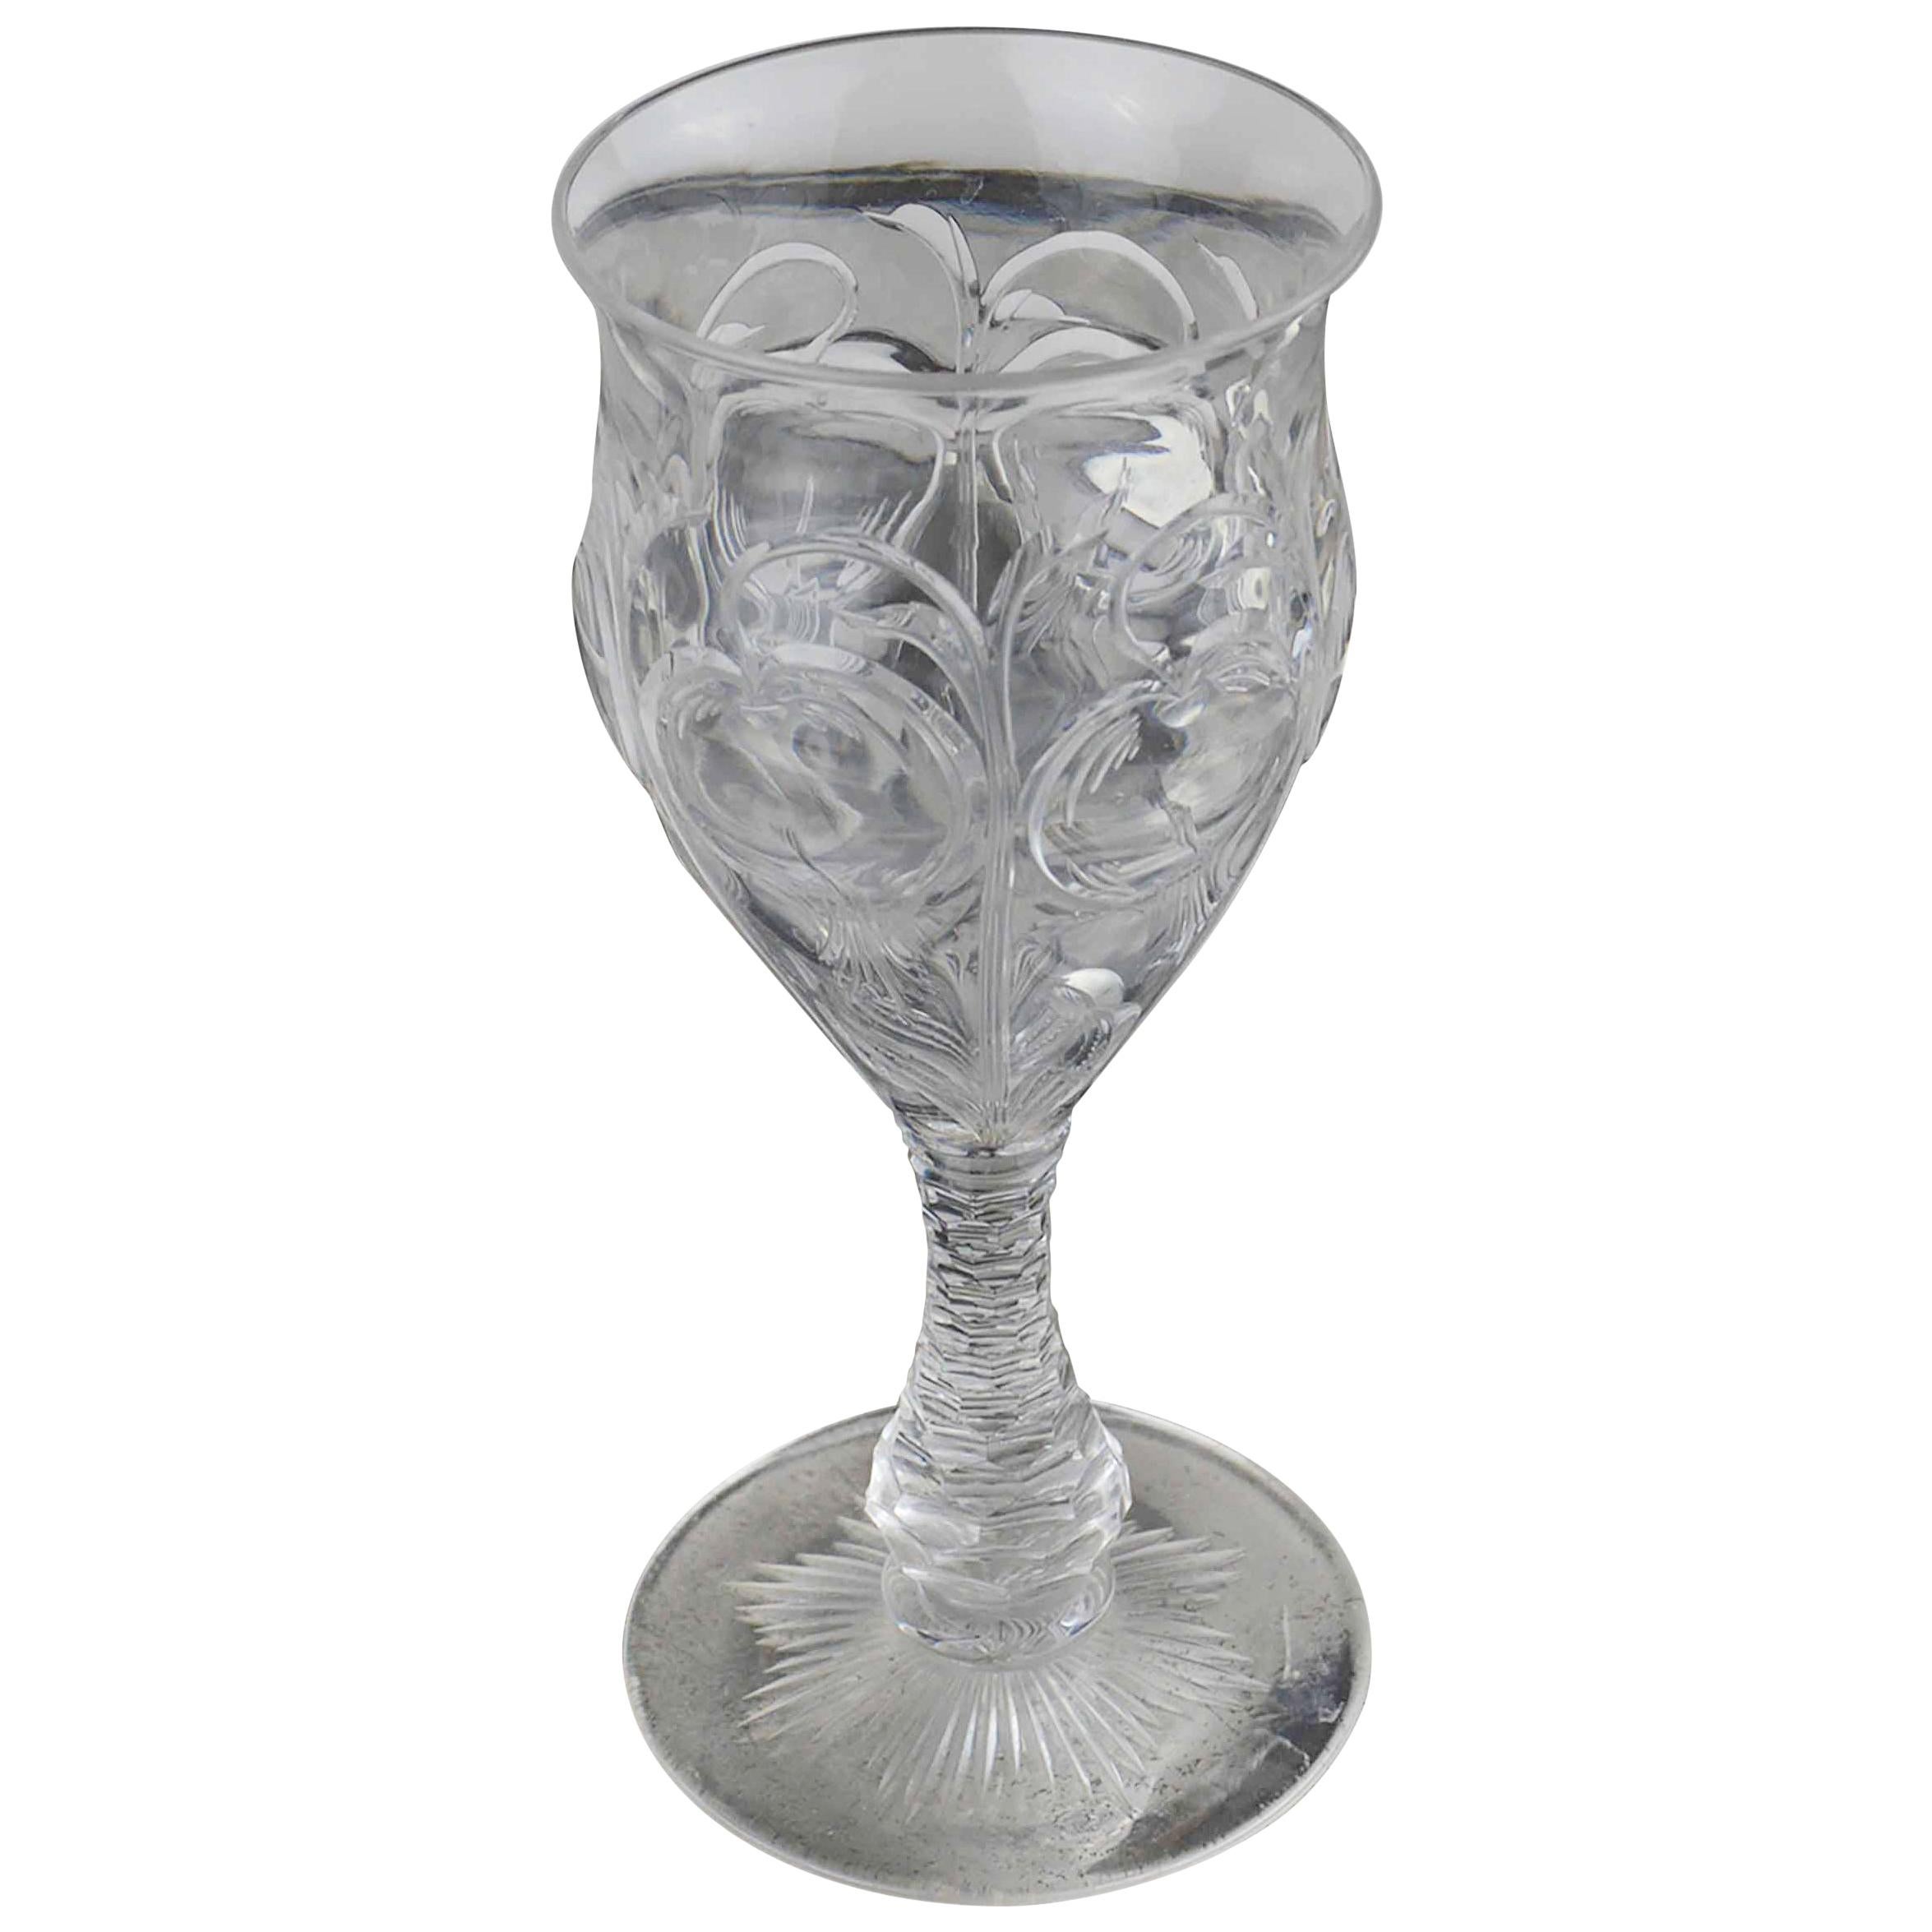 Antique English Cut Crystal Wine Glass